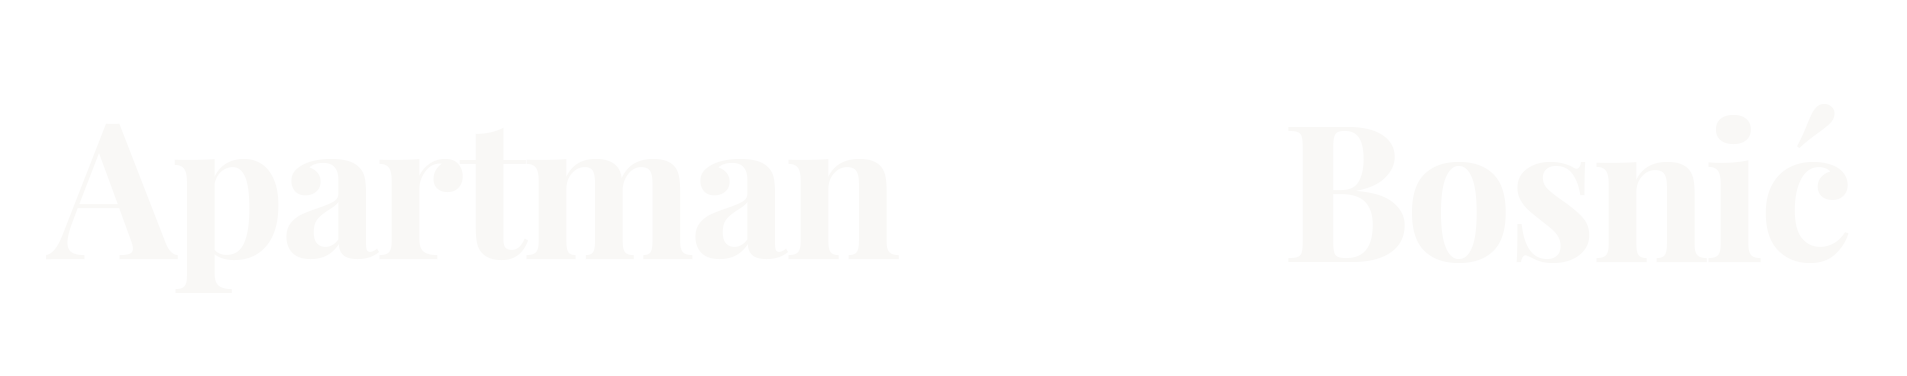 bosnic logo1